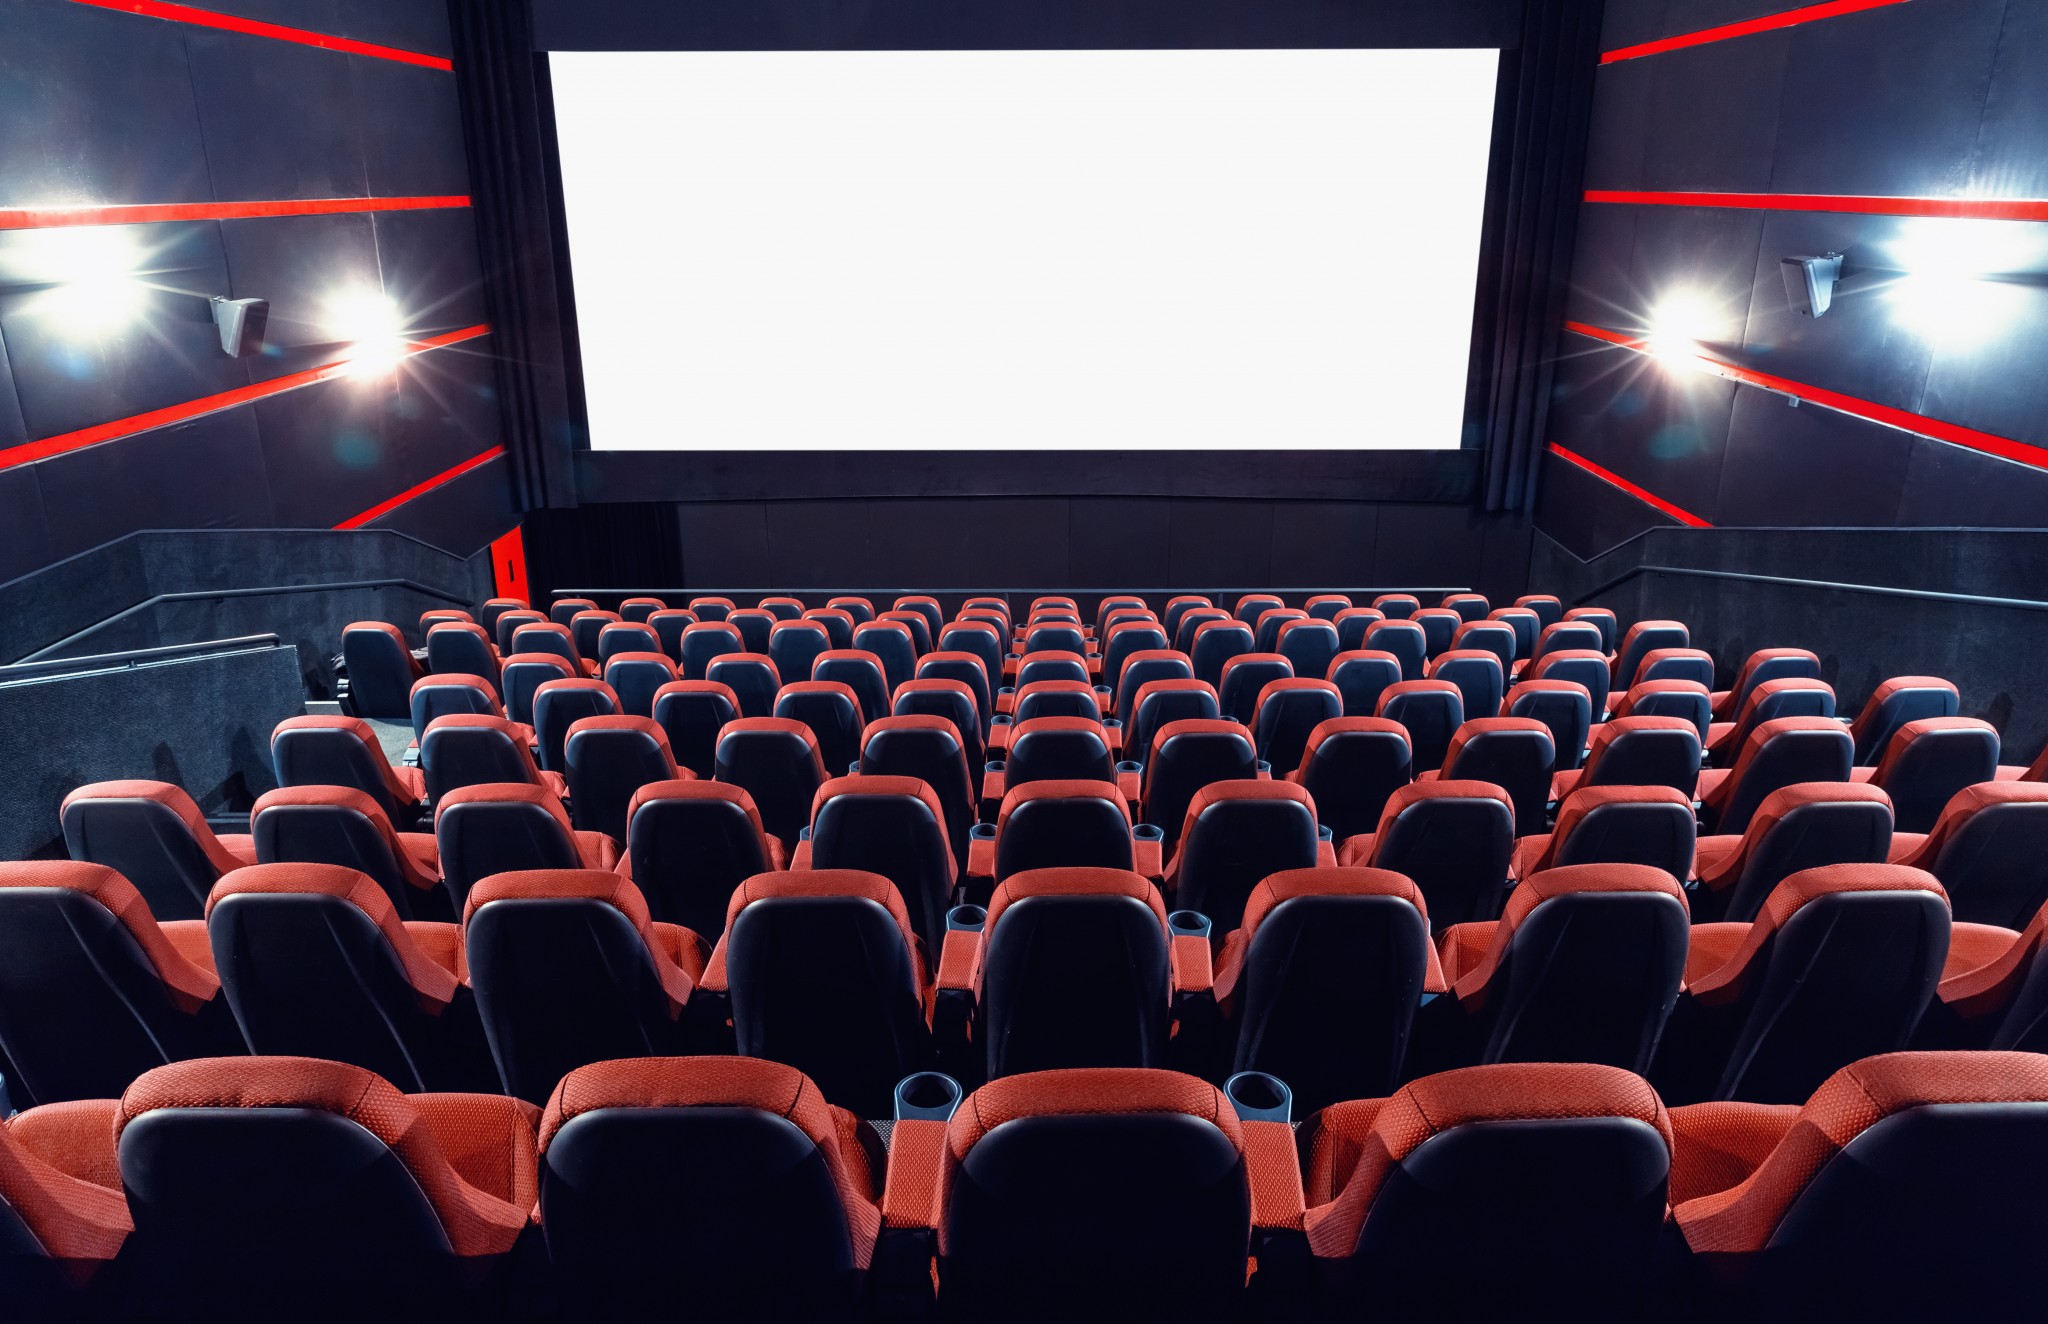 suply-and-demand-movie-theater-seats_jpg.jpg